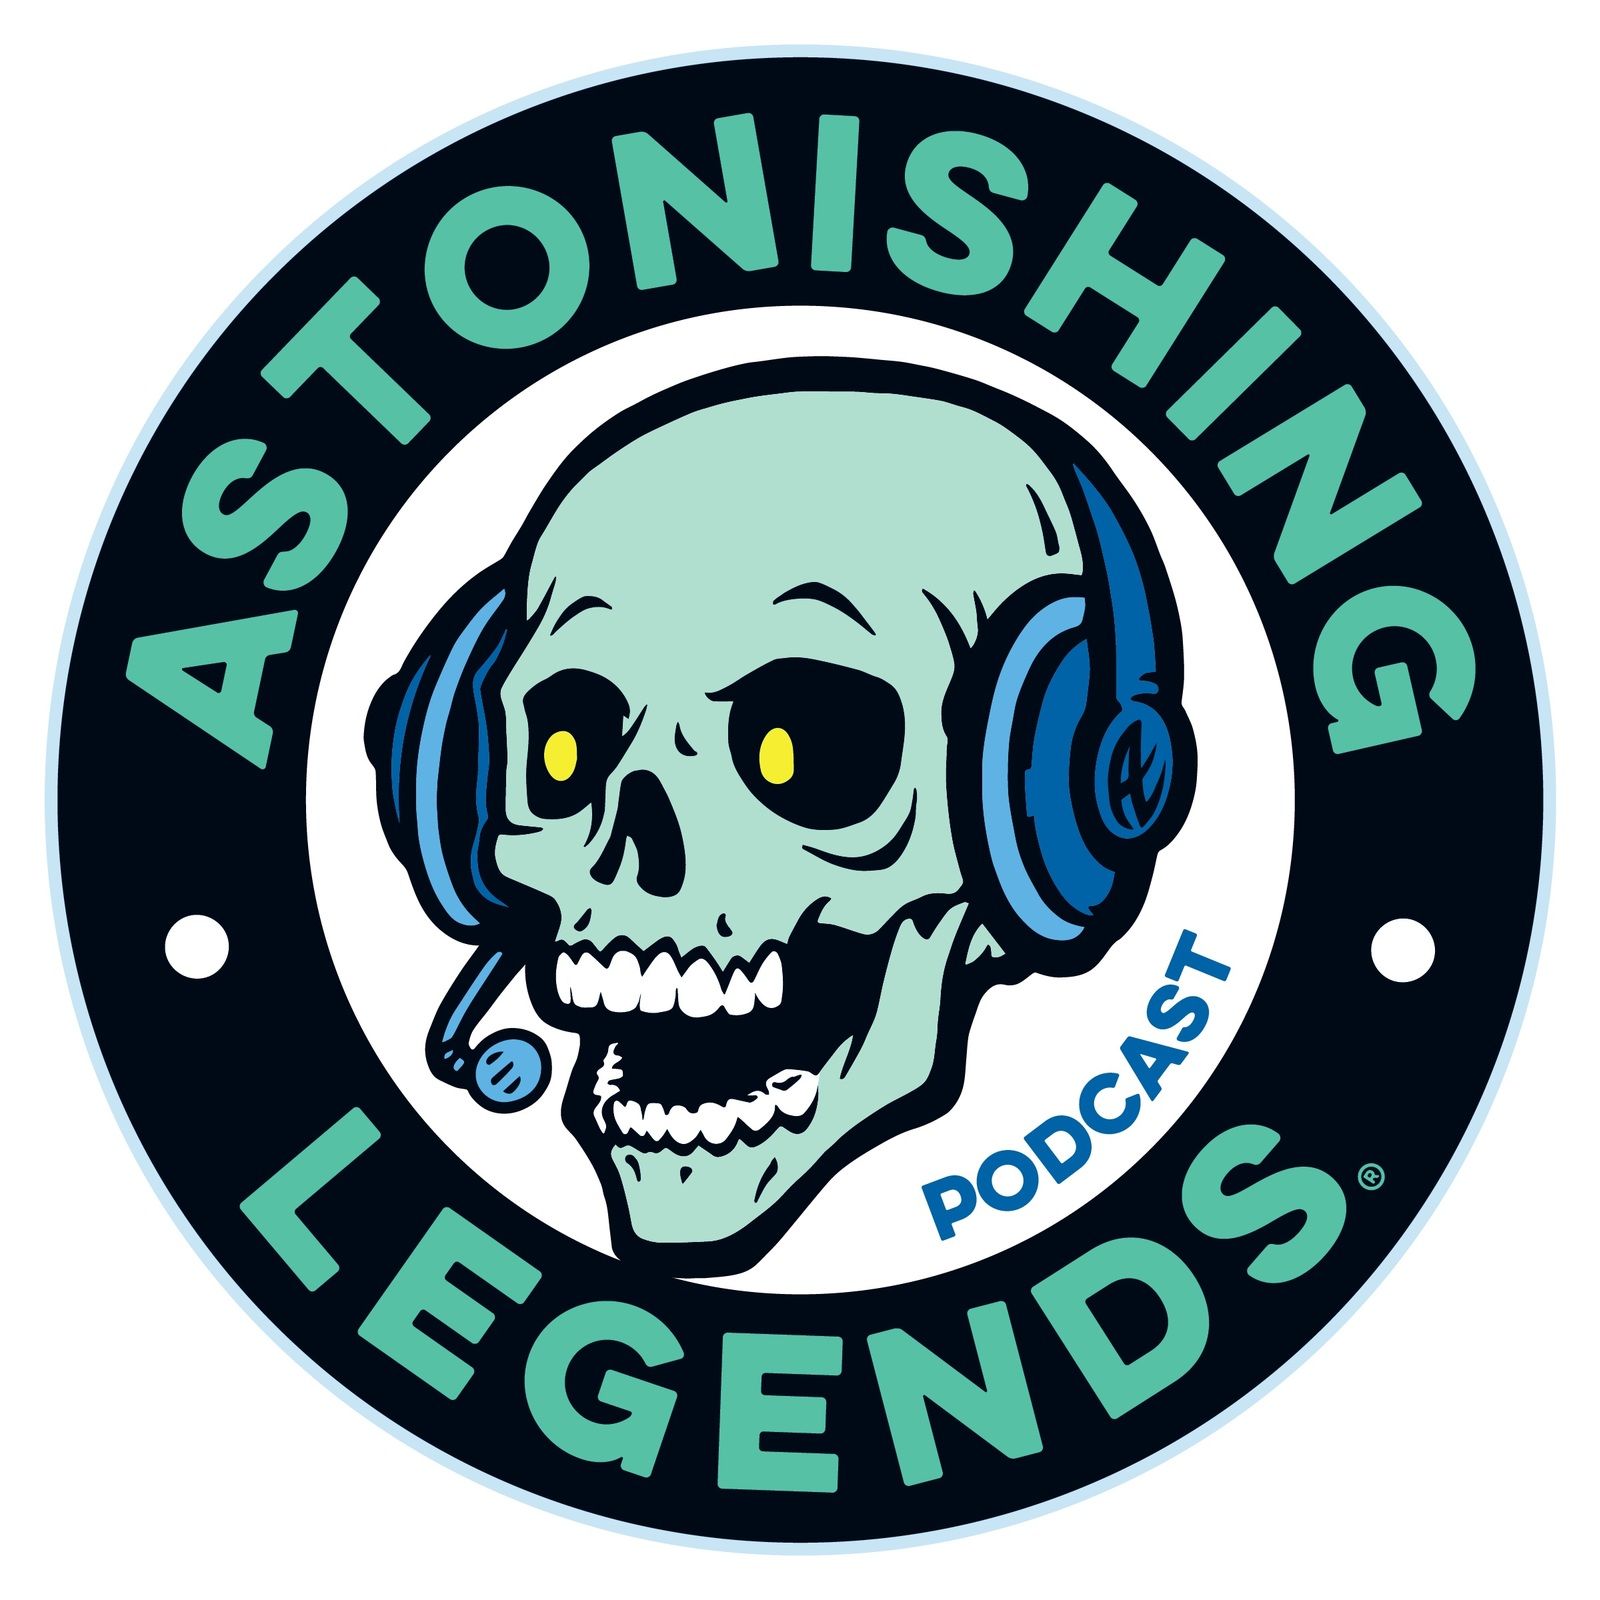 Astonishing Legends podcast